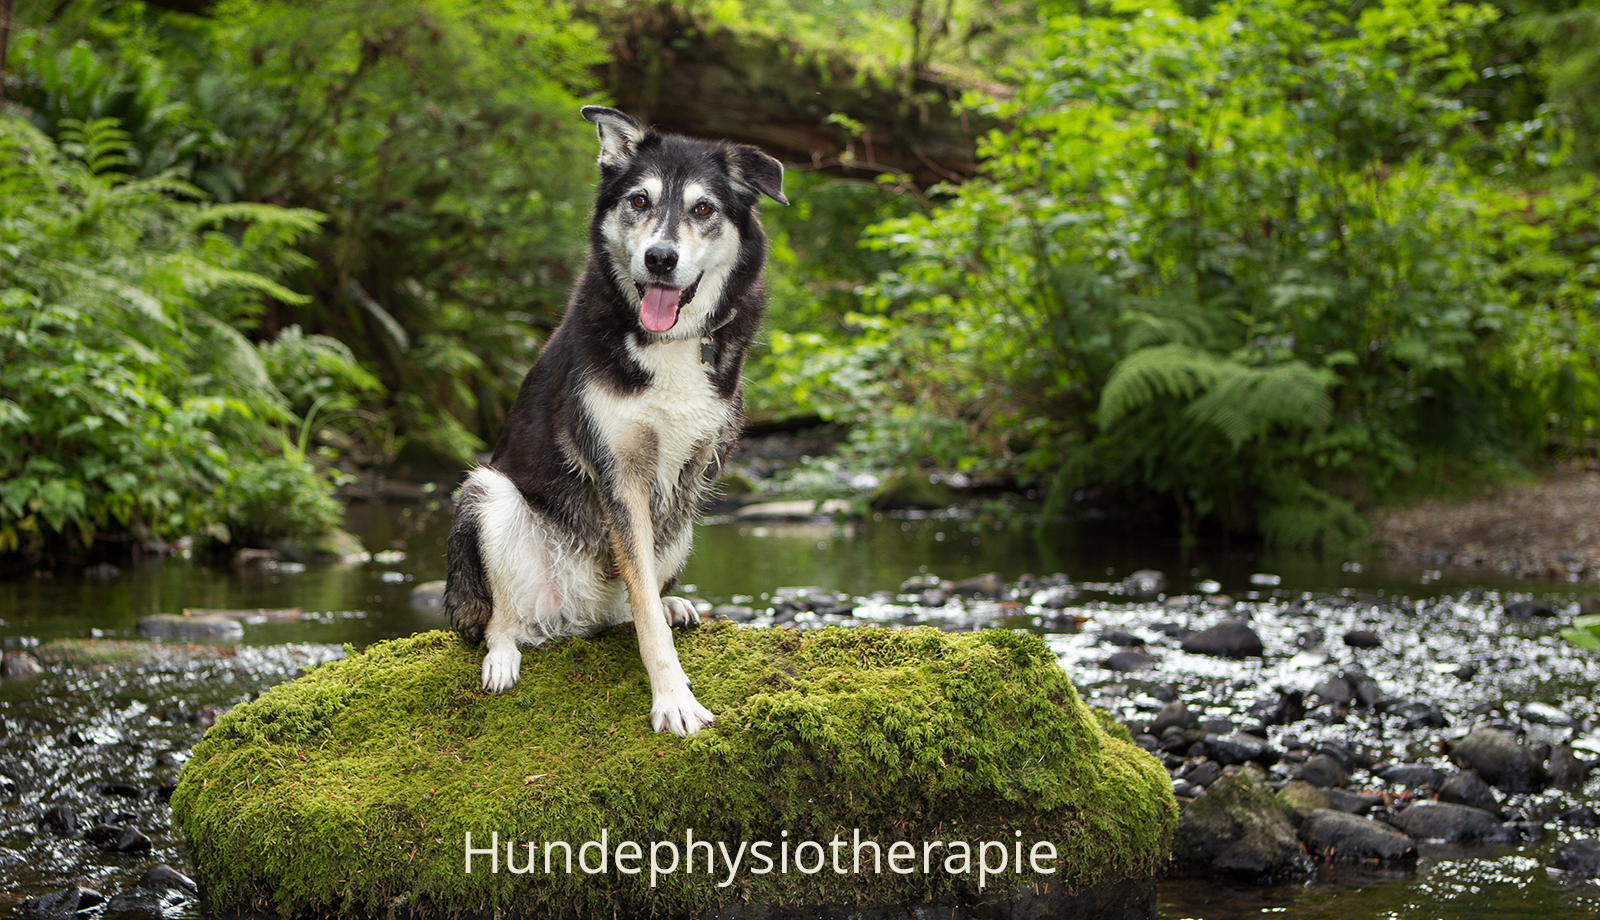 hundephysiotherapie_Sandra_toepper